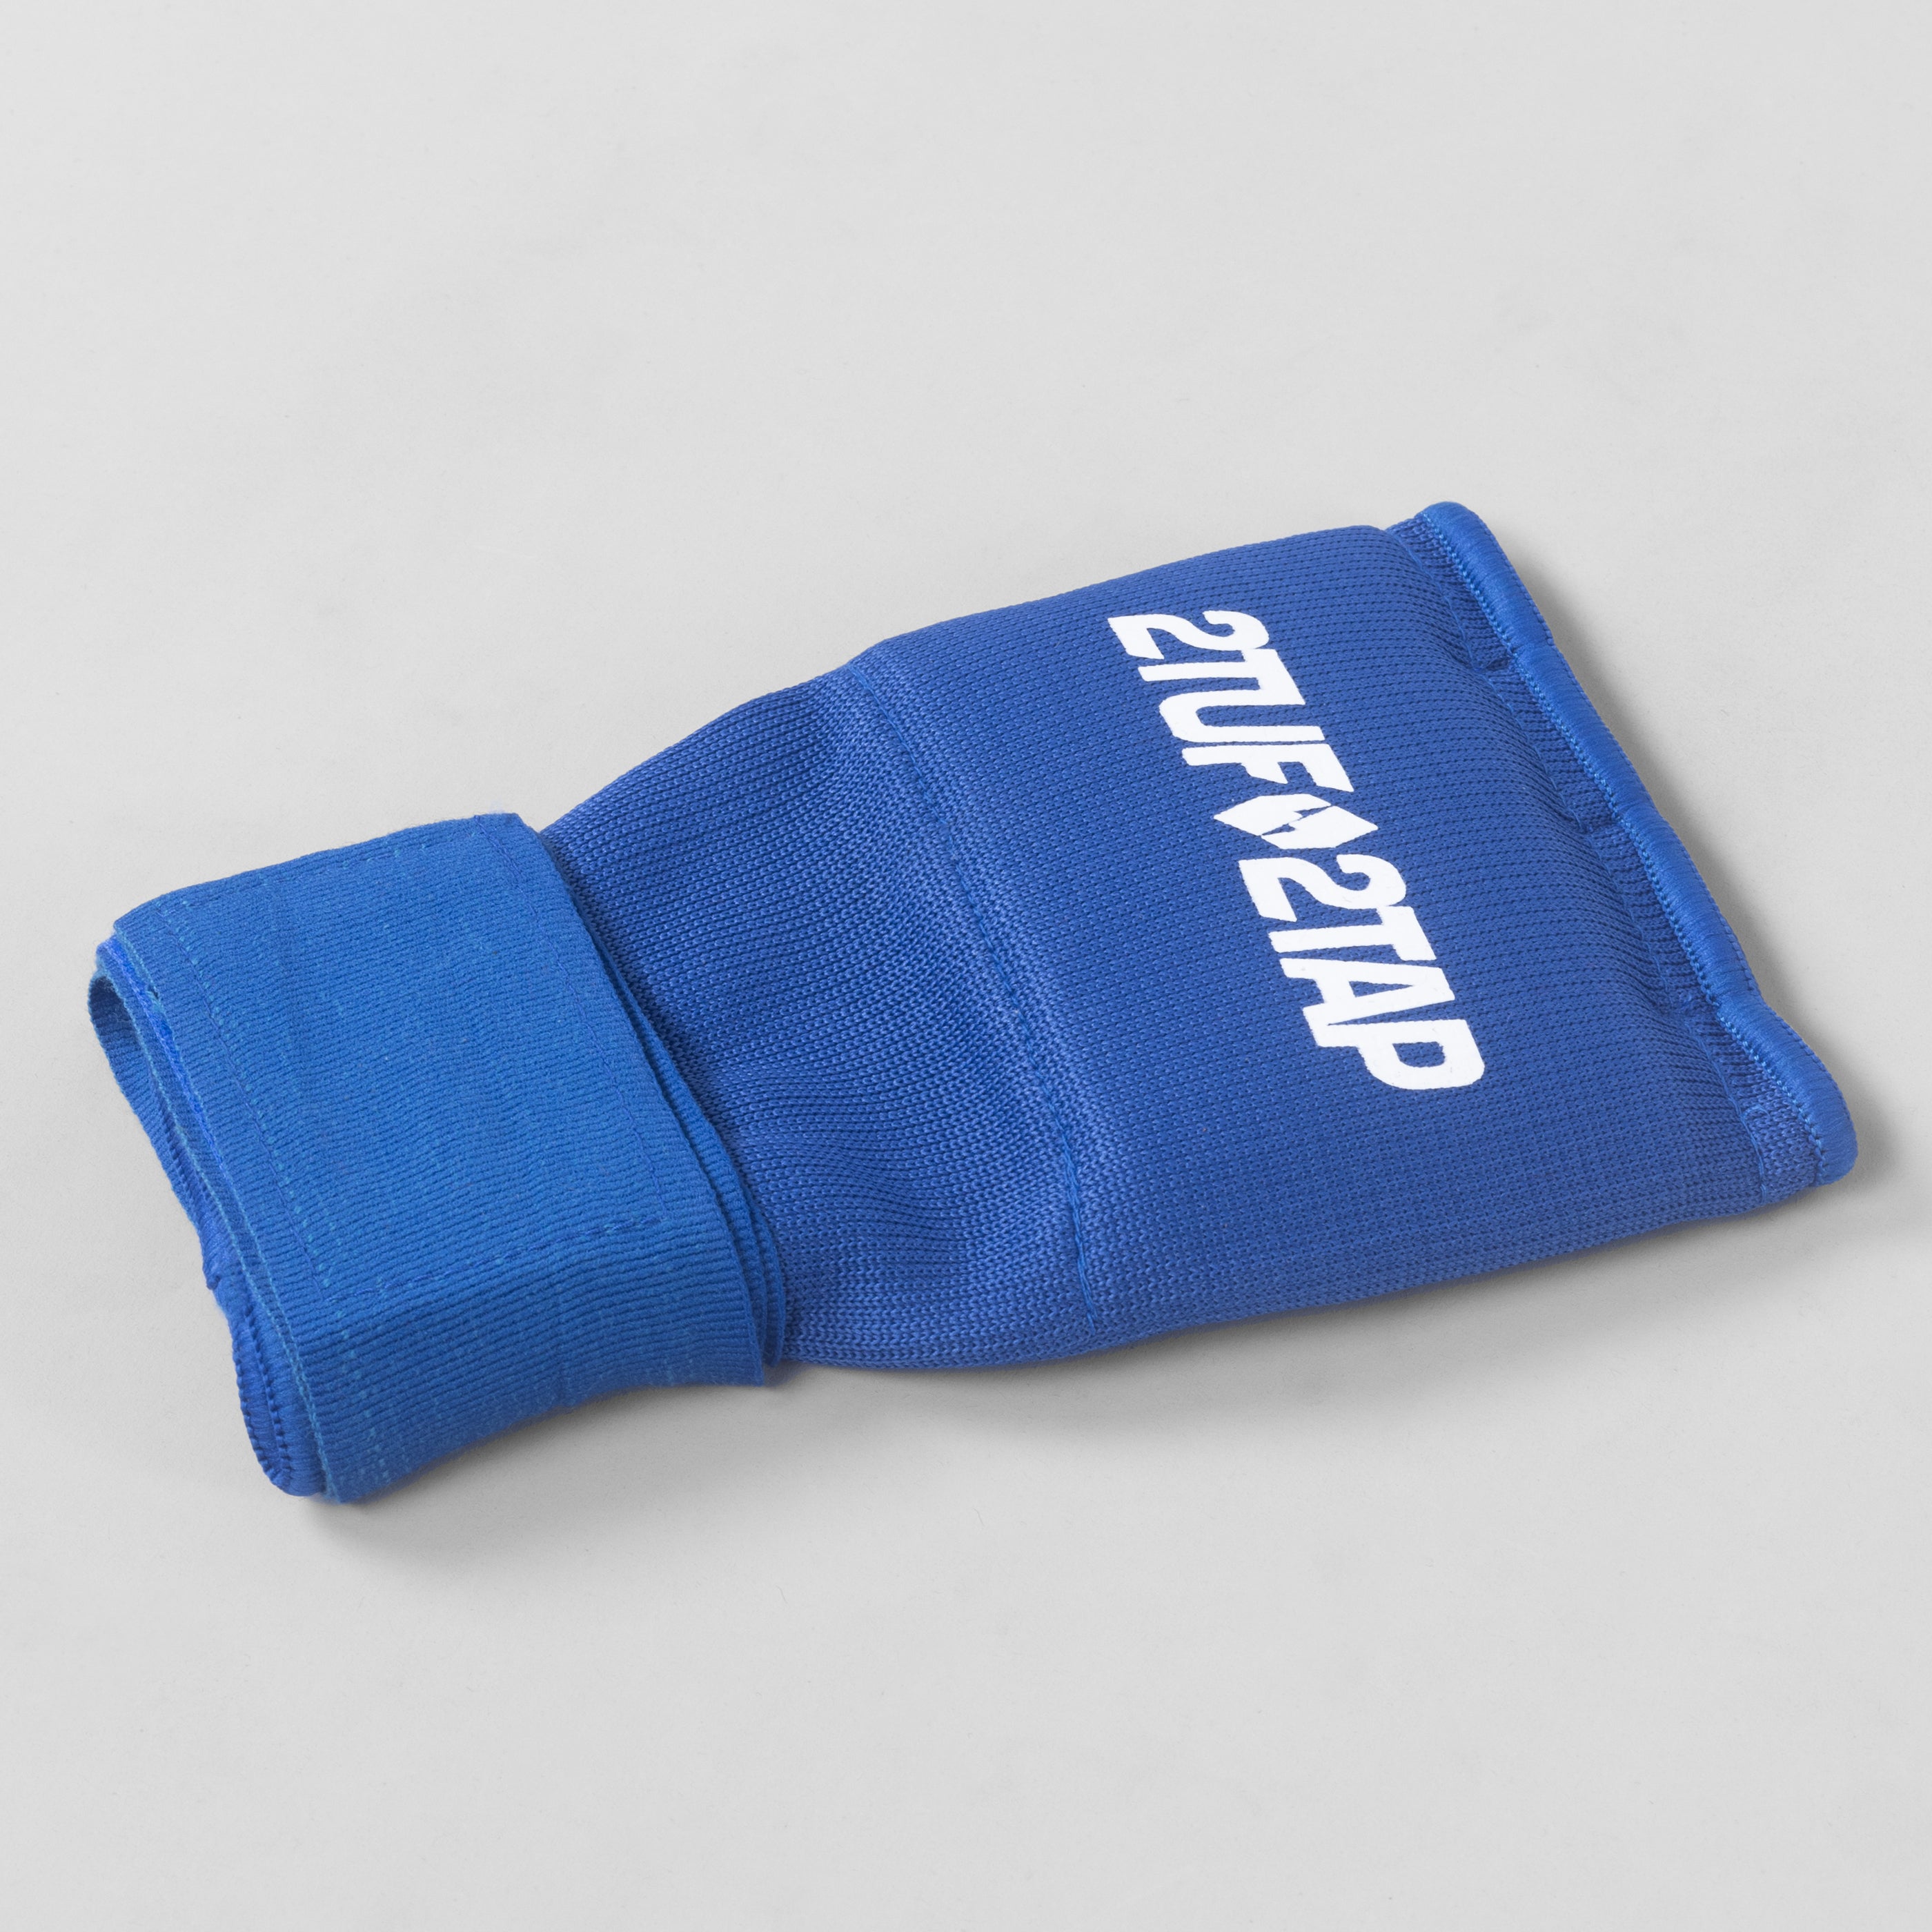 'Pro-Fit' Handwrap Gloves - Blue/White 2TUF2TAP